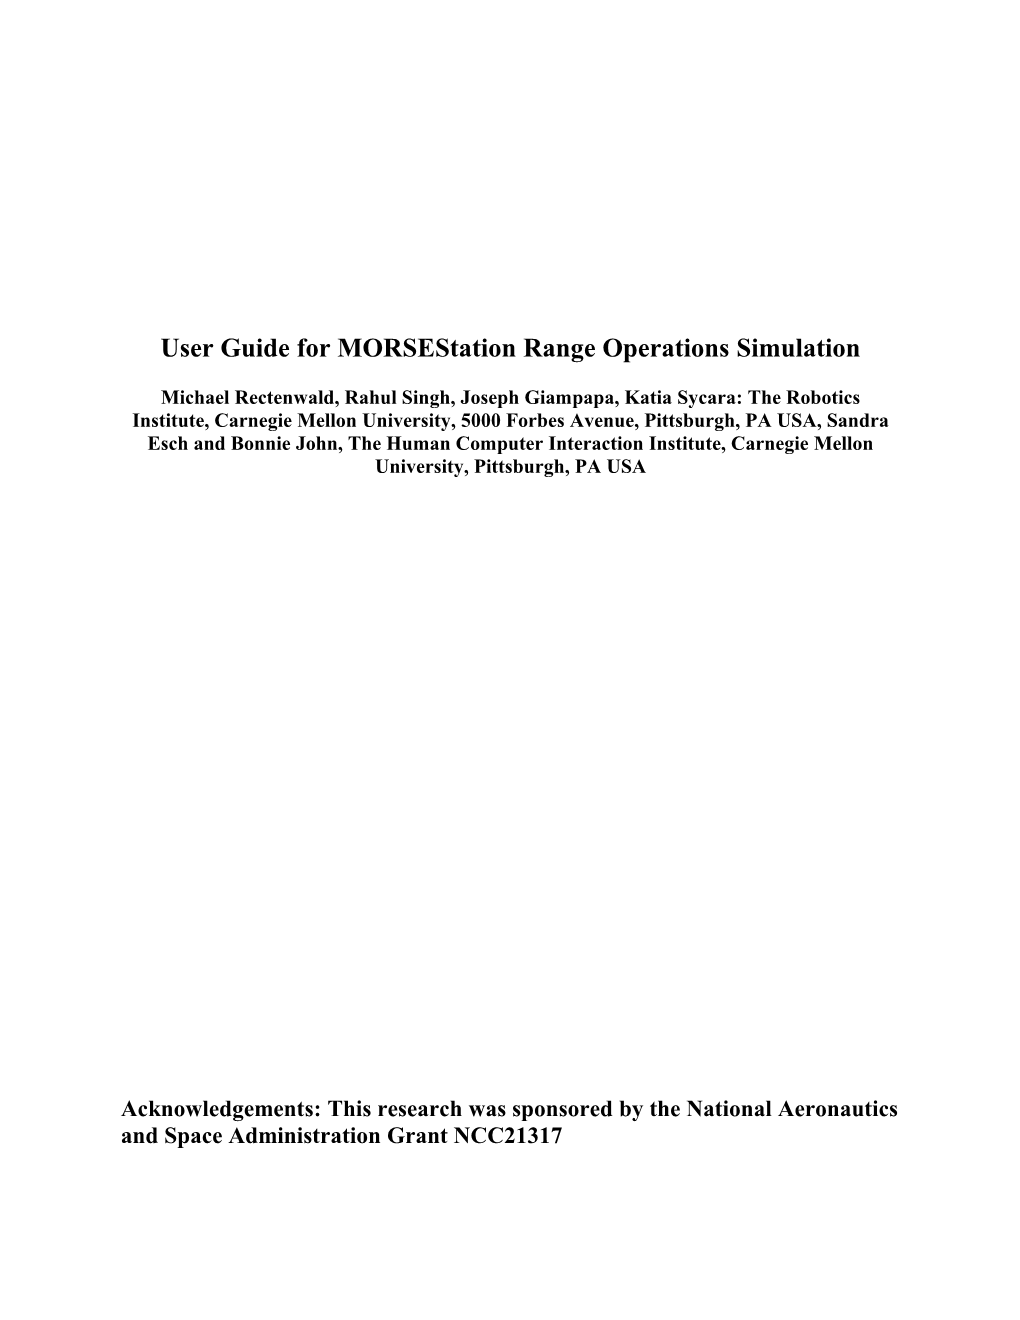 Running Instructions for Morsestation Range Operations